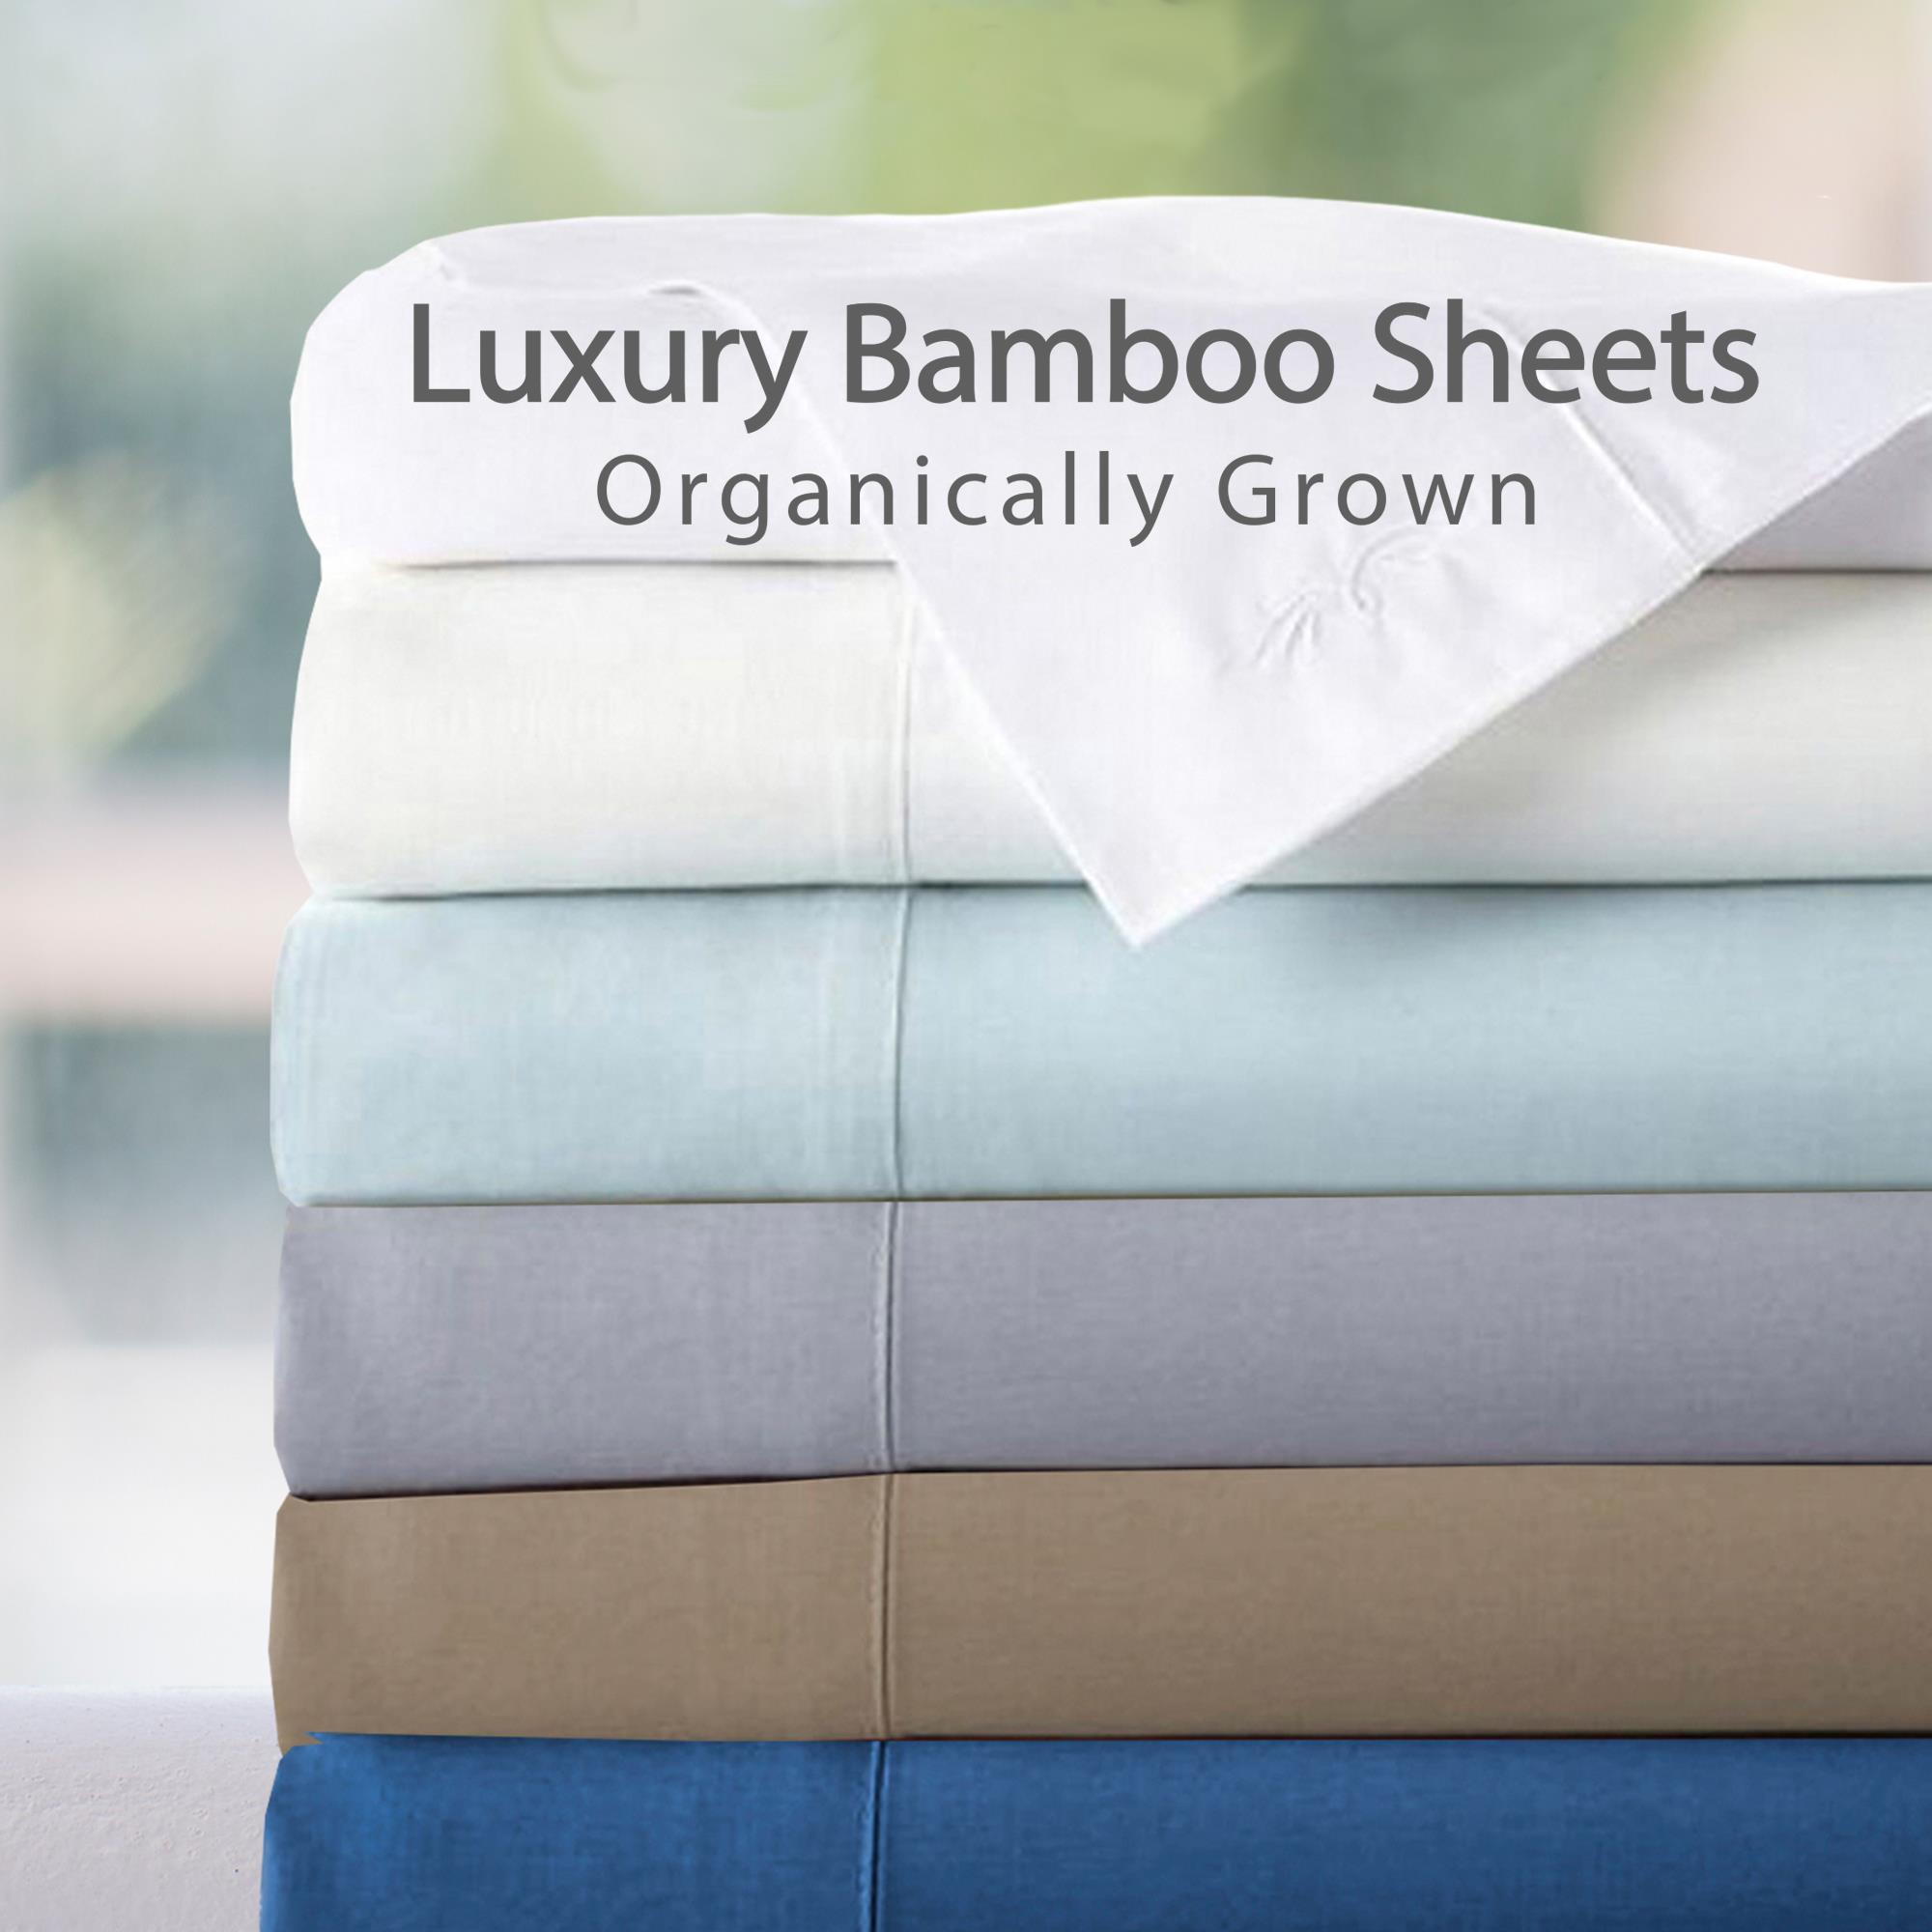 Bamboo sheet colors 2020